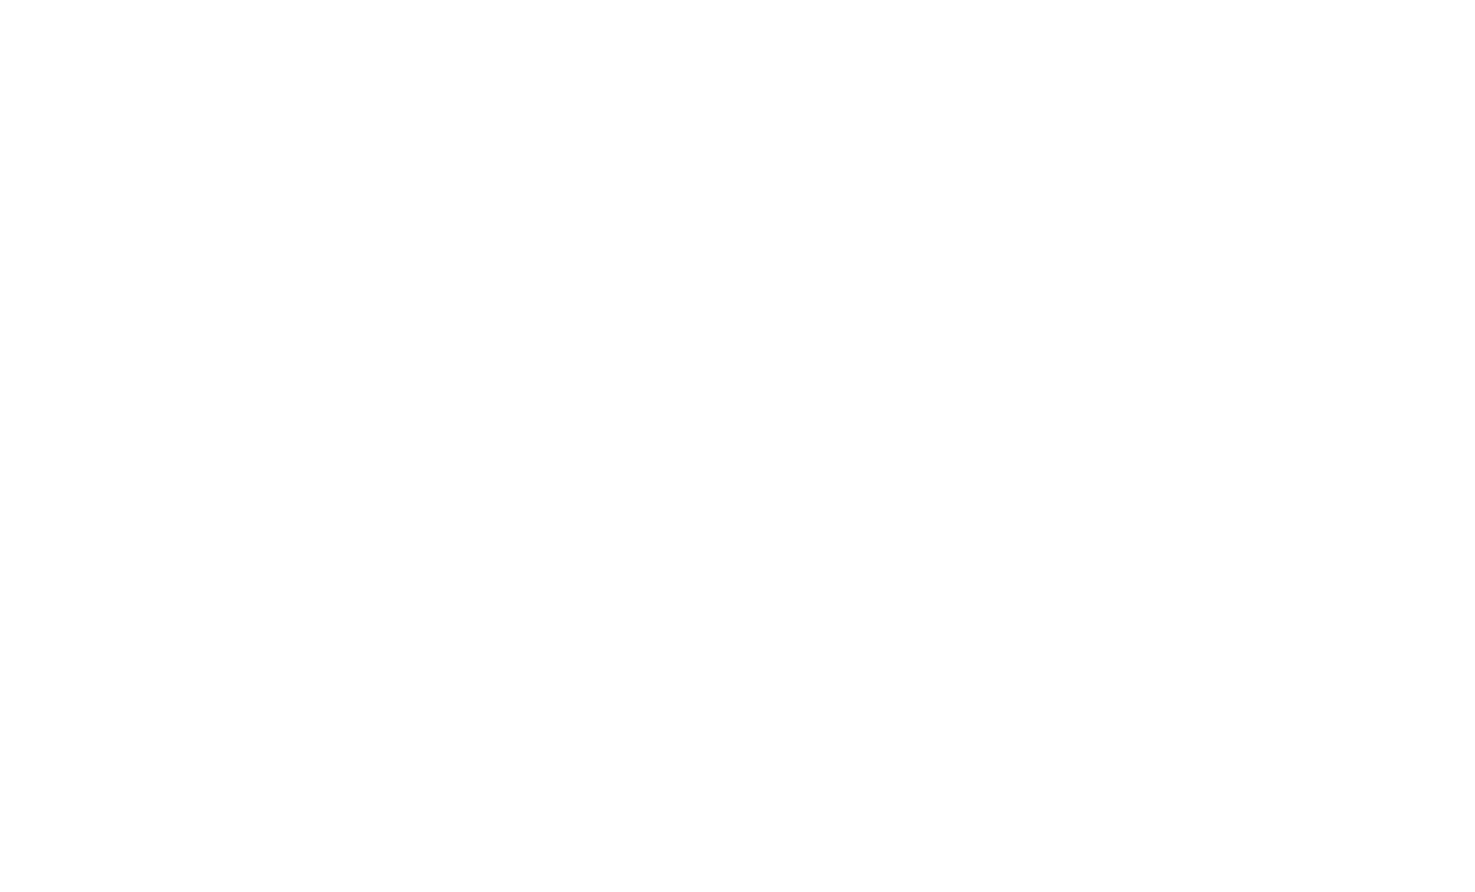 The Domestic Abuse Service logo in white